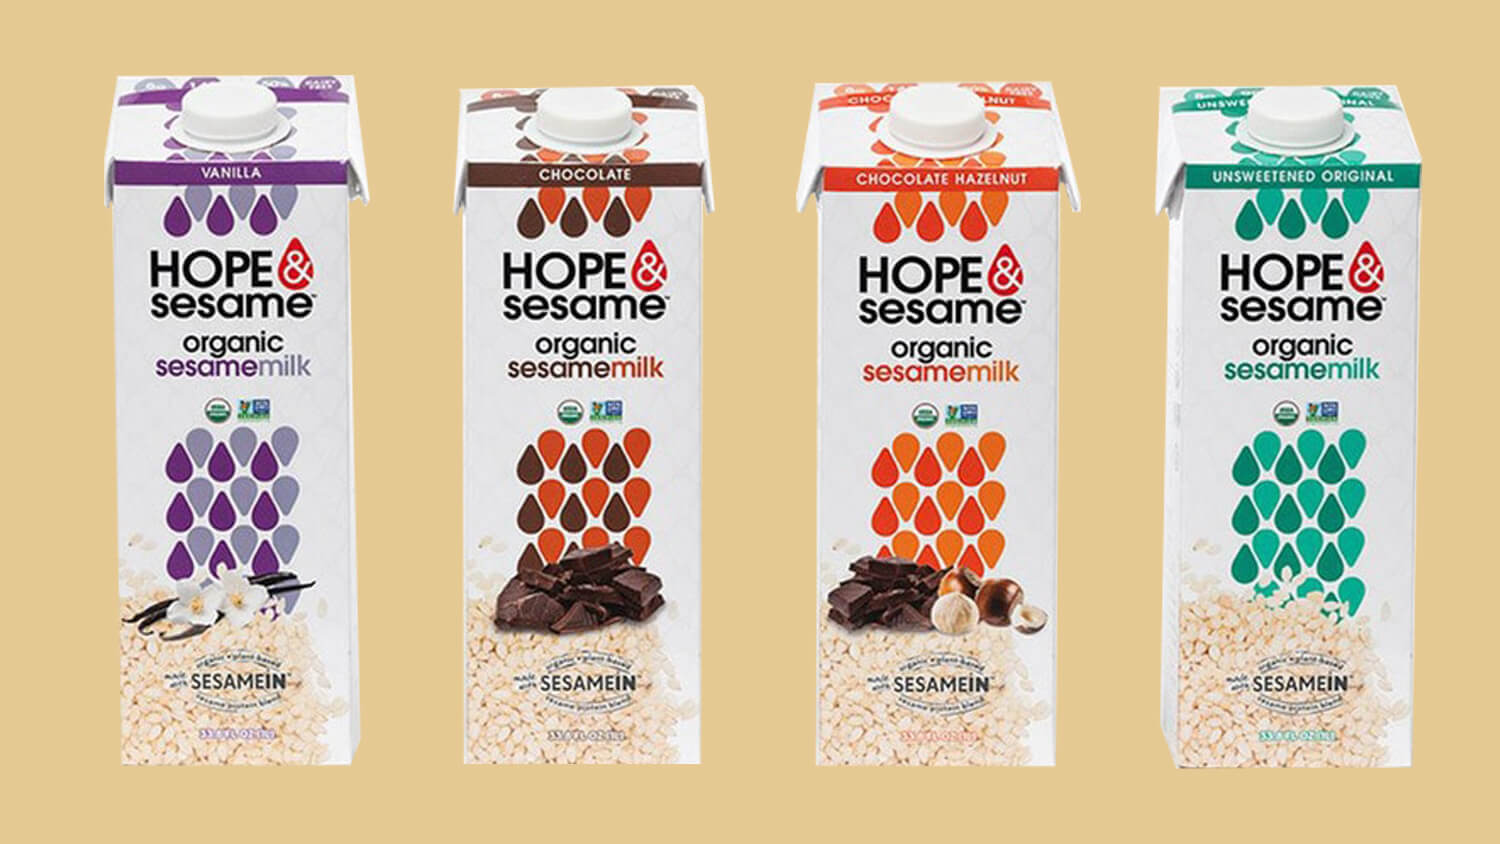 Hope & Sesame Launches World’s First Vegan and Organic Sesamemilk Range